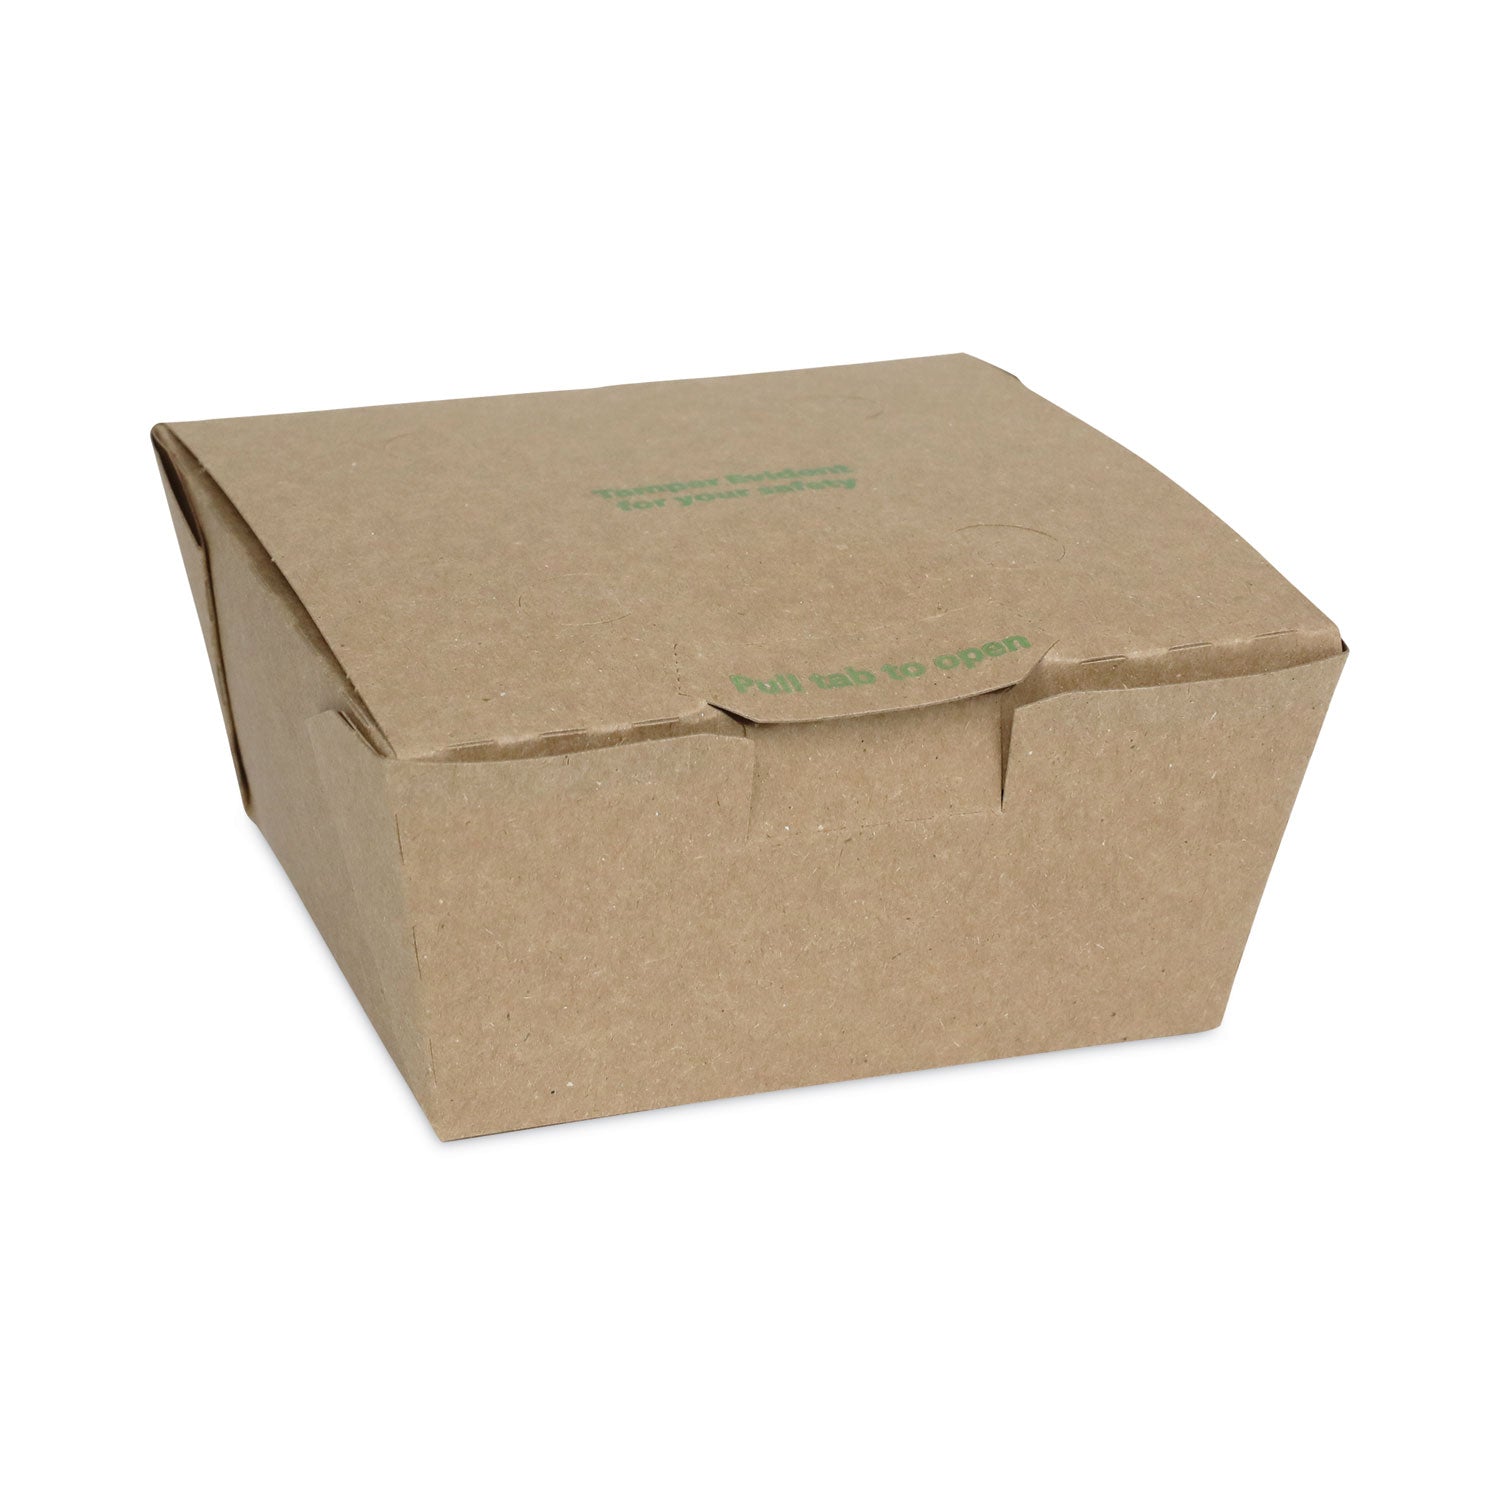 earthchoice-tamper-evident-onebox-paper-box-45-x-45-x-25-kraft-312-carton_pctnob01kecte - 3